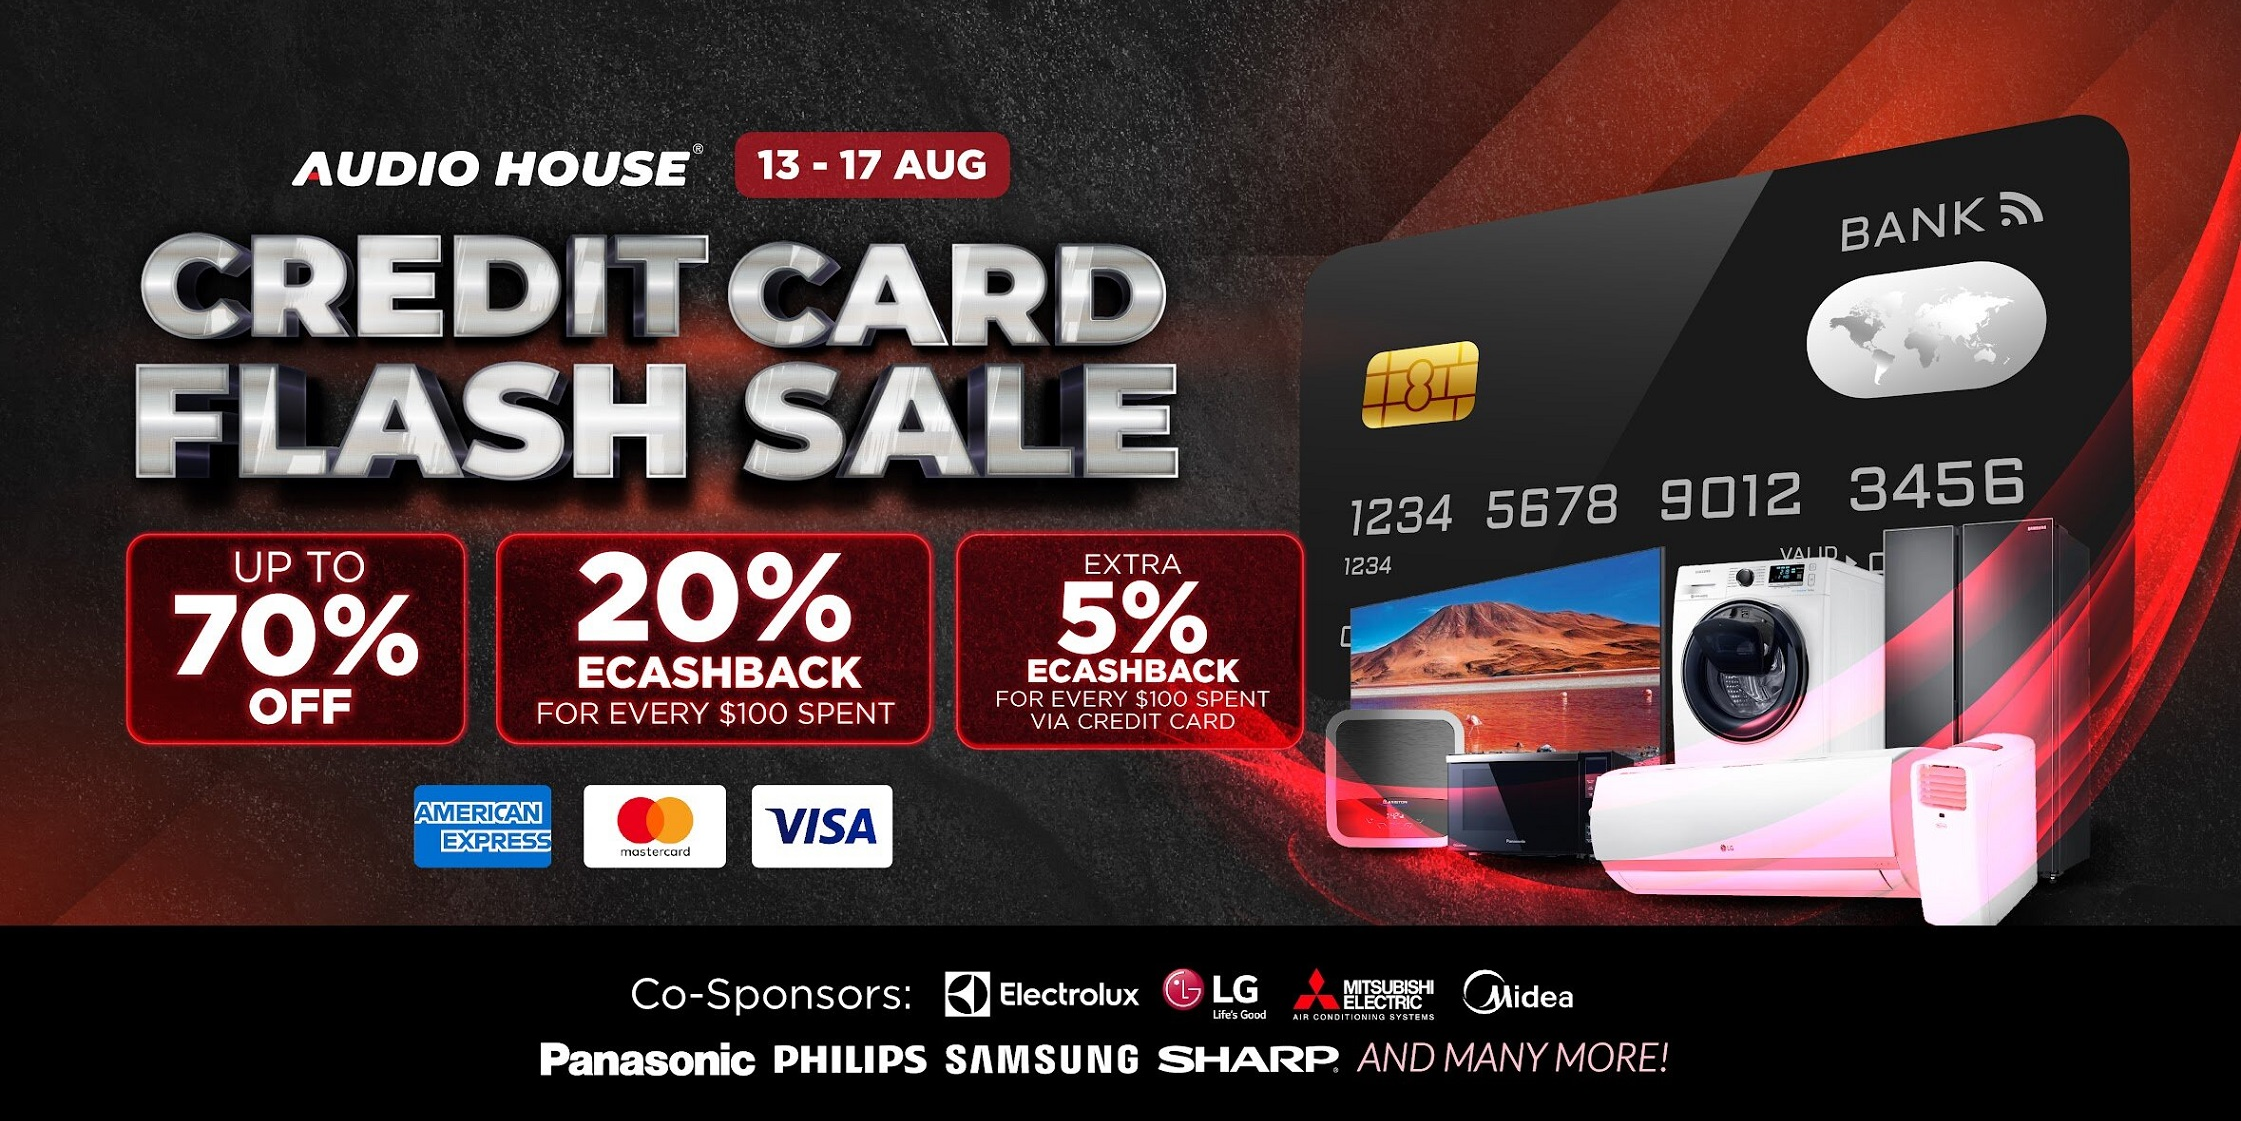 [Audio House Credit Card Flash Sale] Get 20% eCashback* + Extra 5% eCashback* Spent Via Credit Card